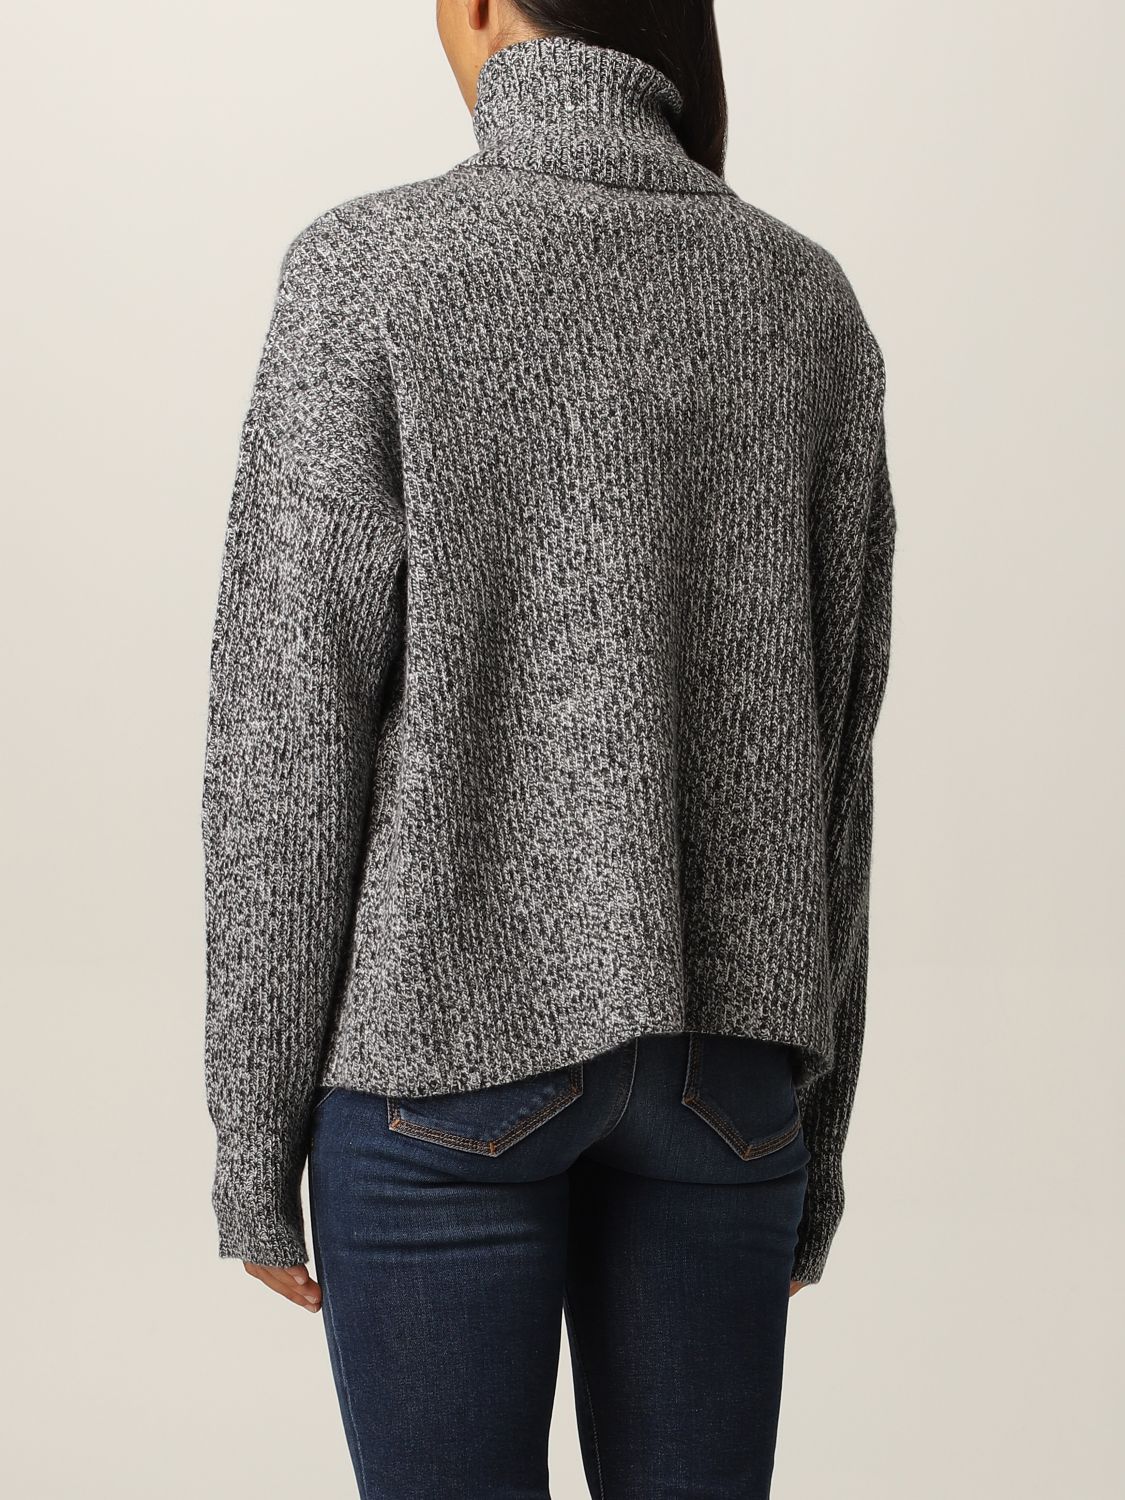 Sportmax cashmere sweater